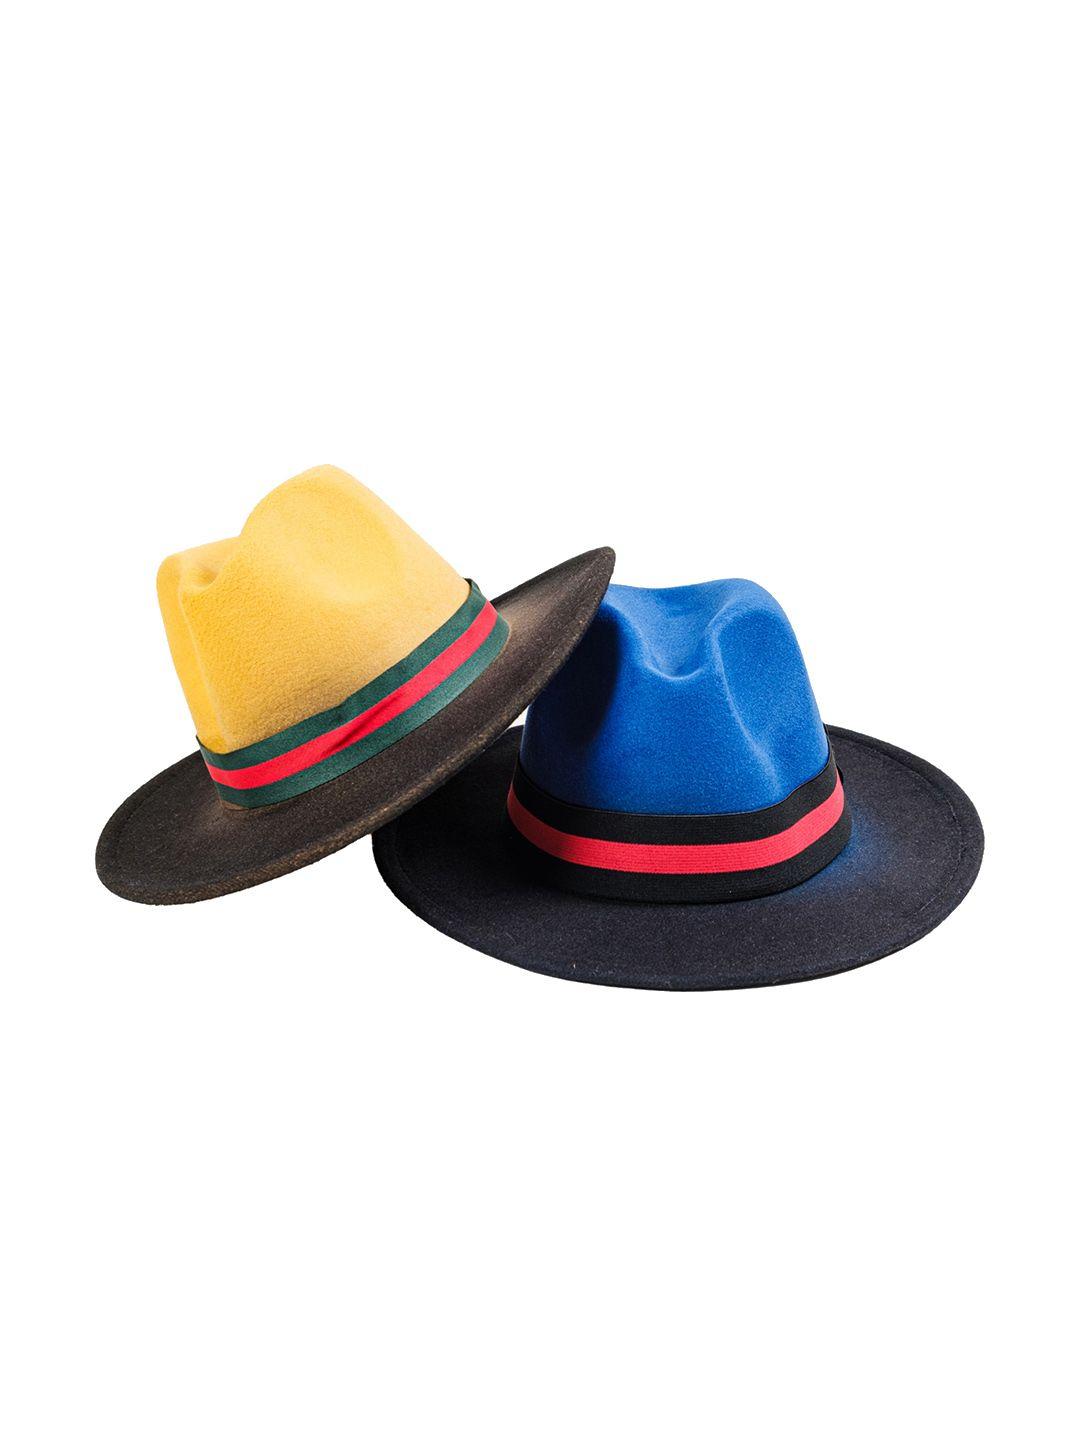 chokore cowboy style fedora hat